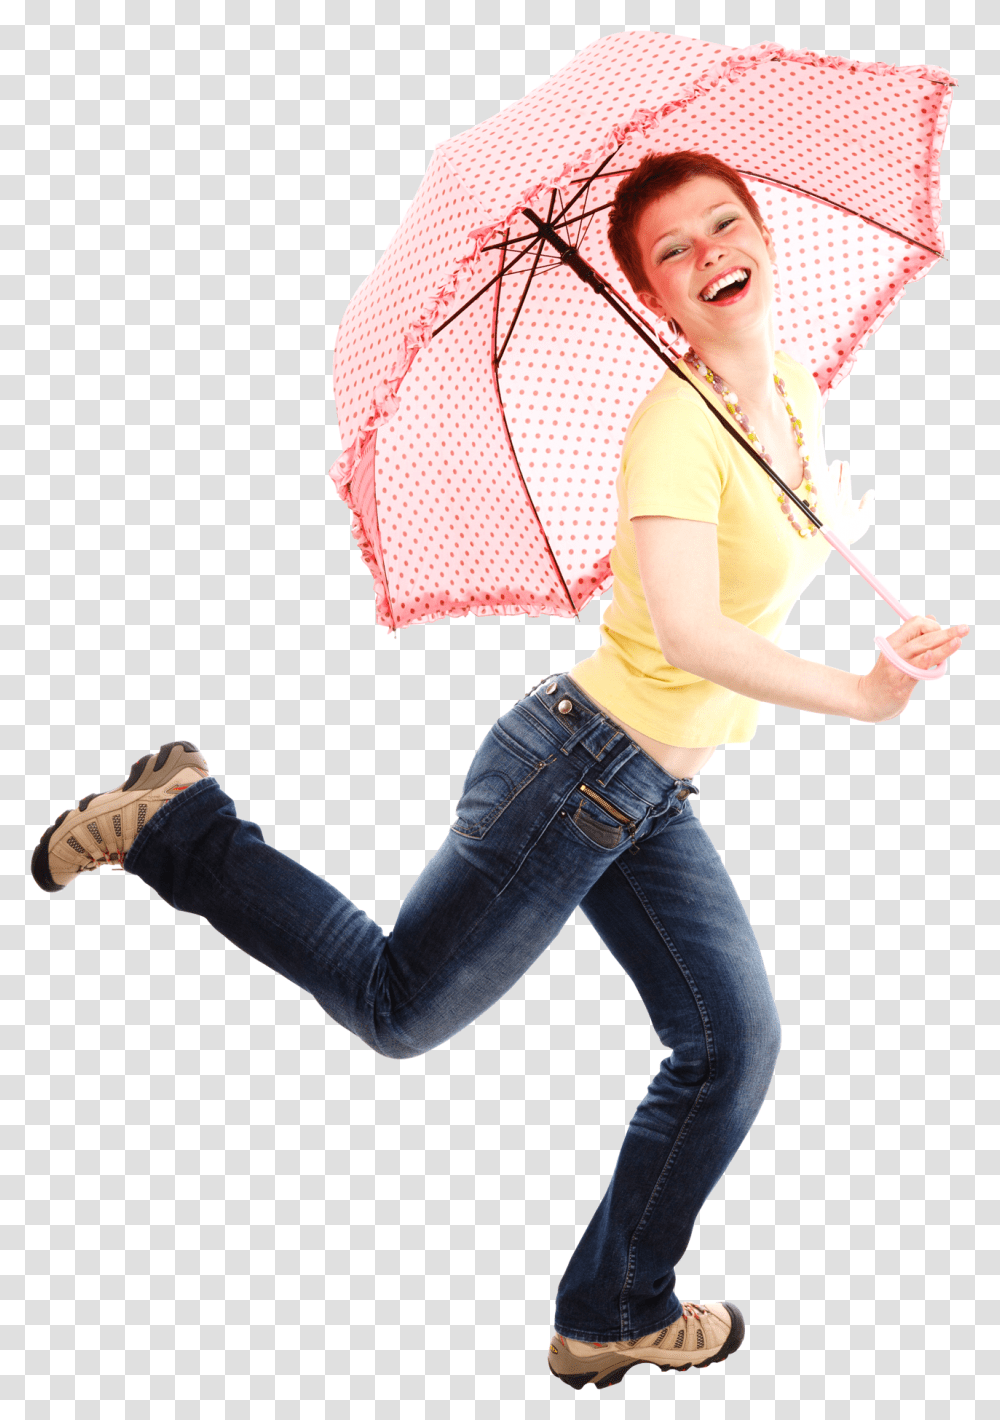 Beautiful Young Woman With Umbrella Image Young Woman With Umbrella Clipart, Person, Pants, Leisure Activities Transparent Png